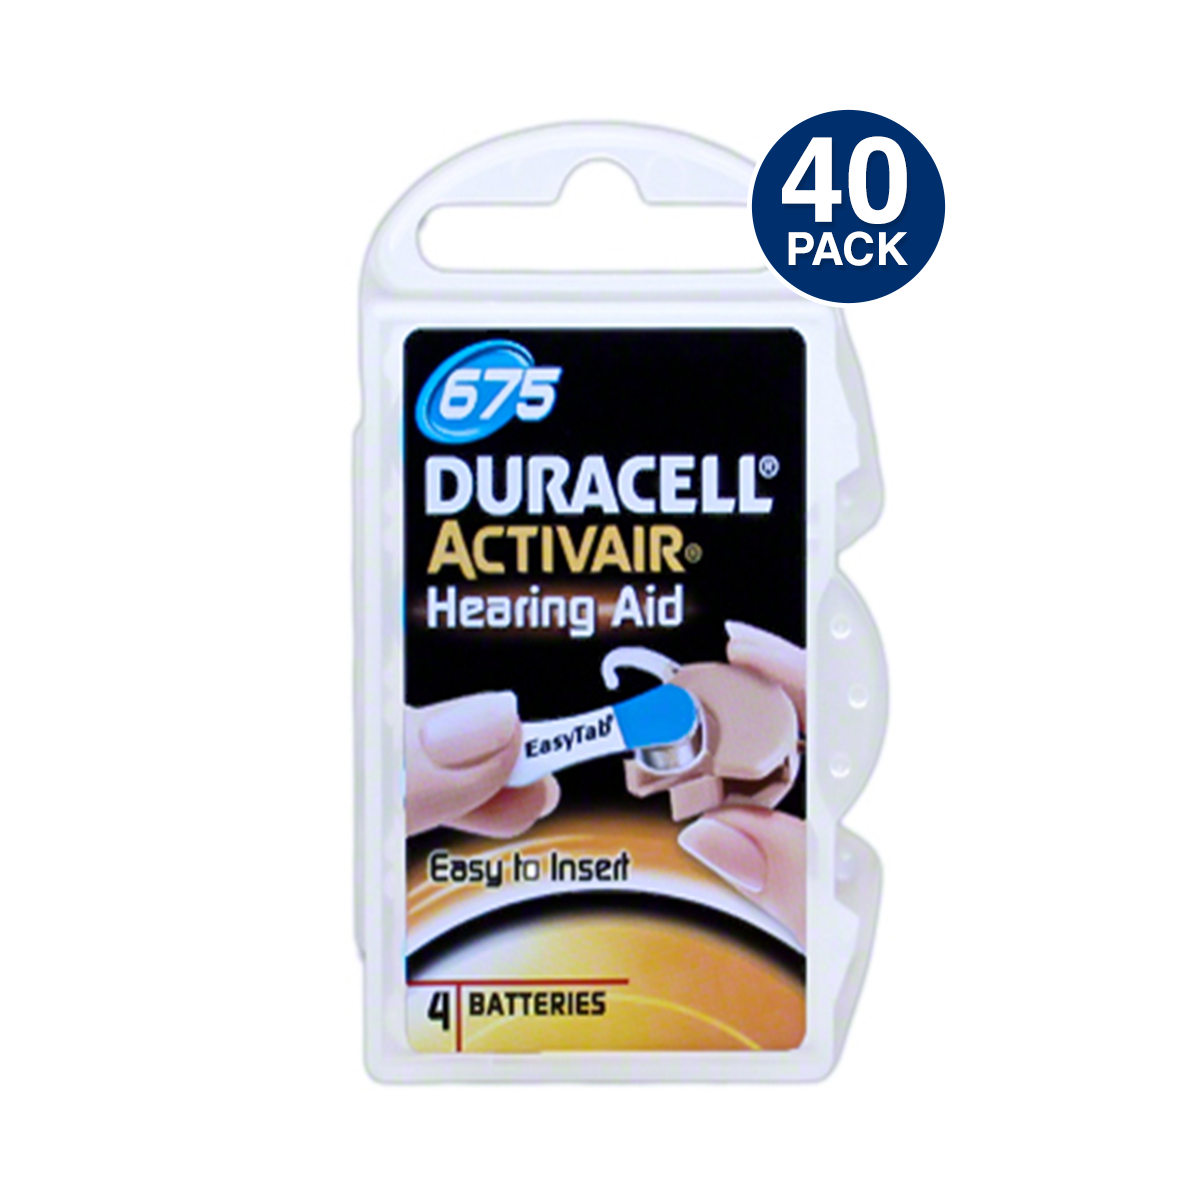 Duracell Activair 675 Hearing Aid Battery (40 PCS)